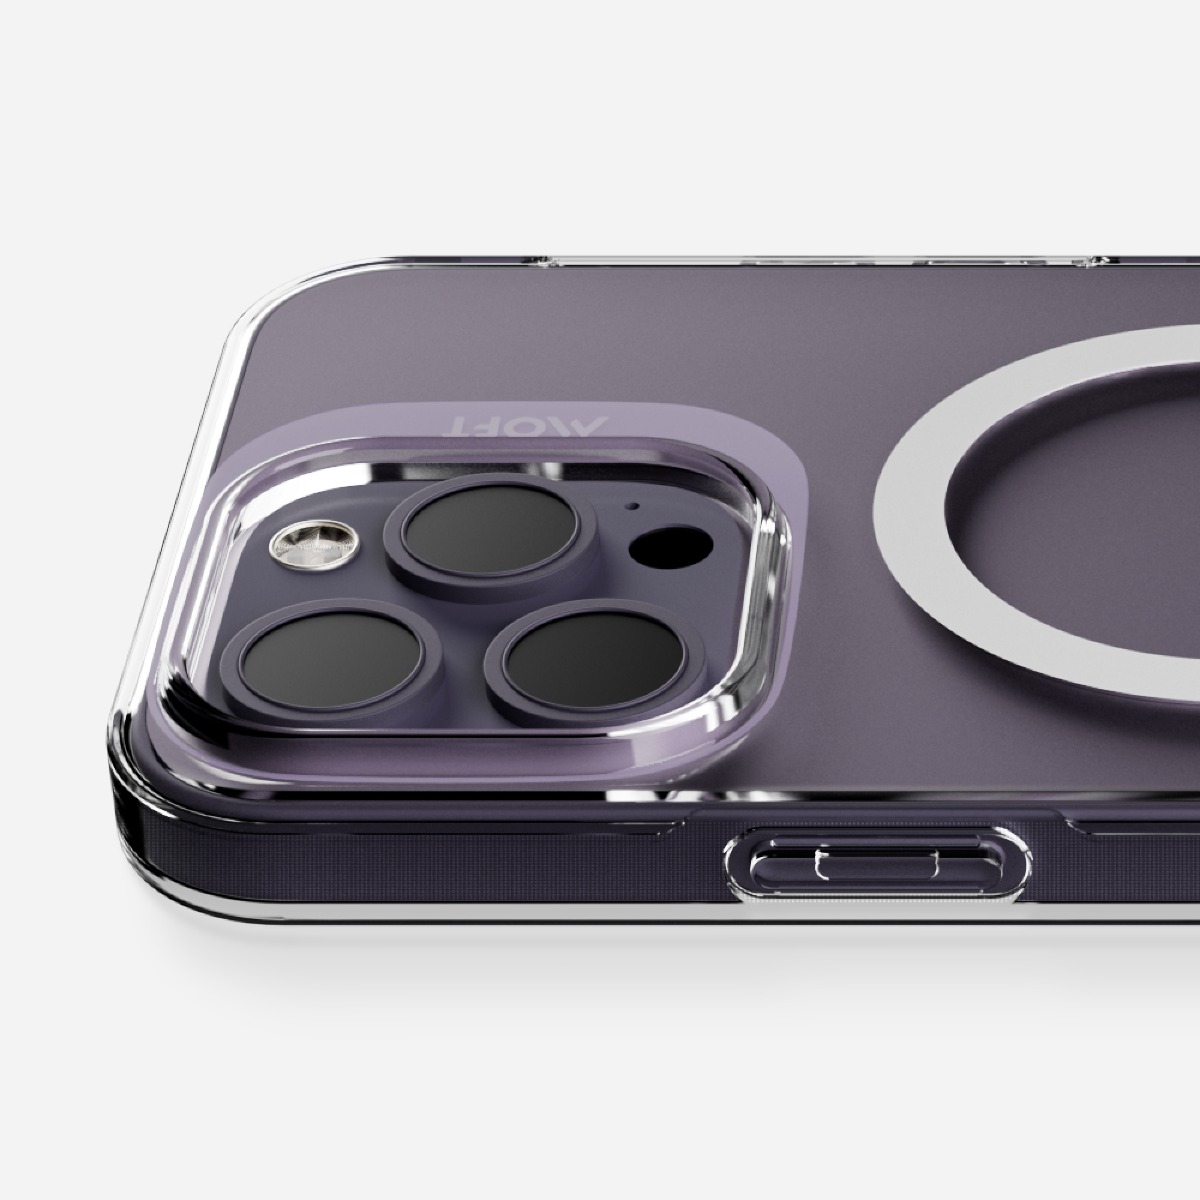 Moft Snap Case MagSafe Enhanced iPhone